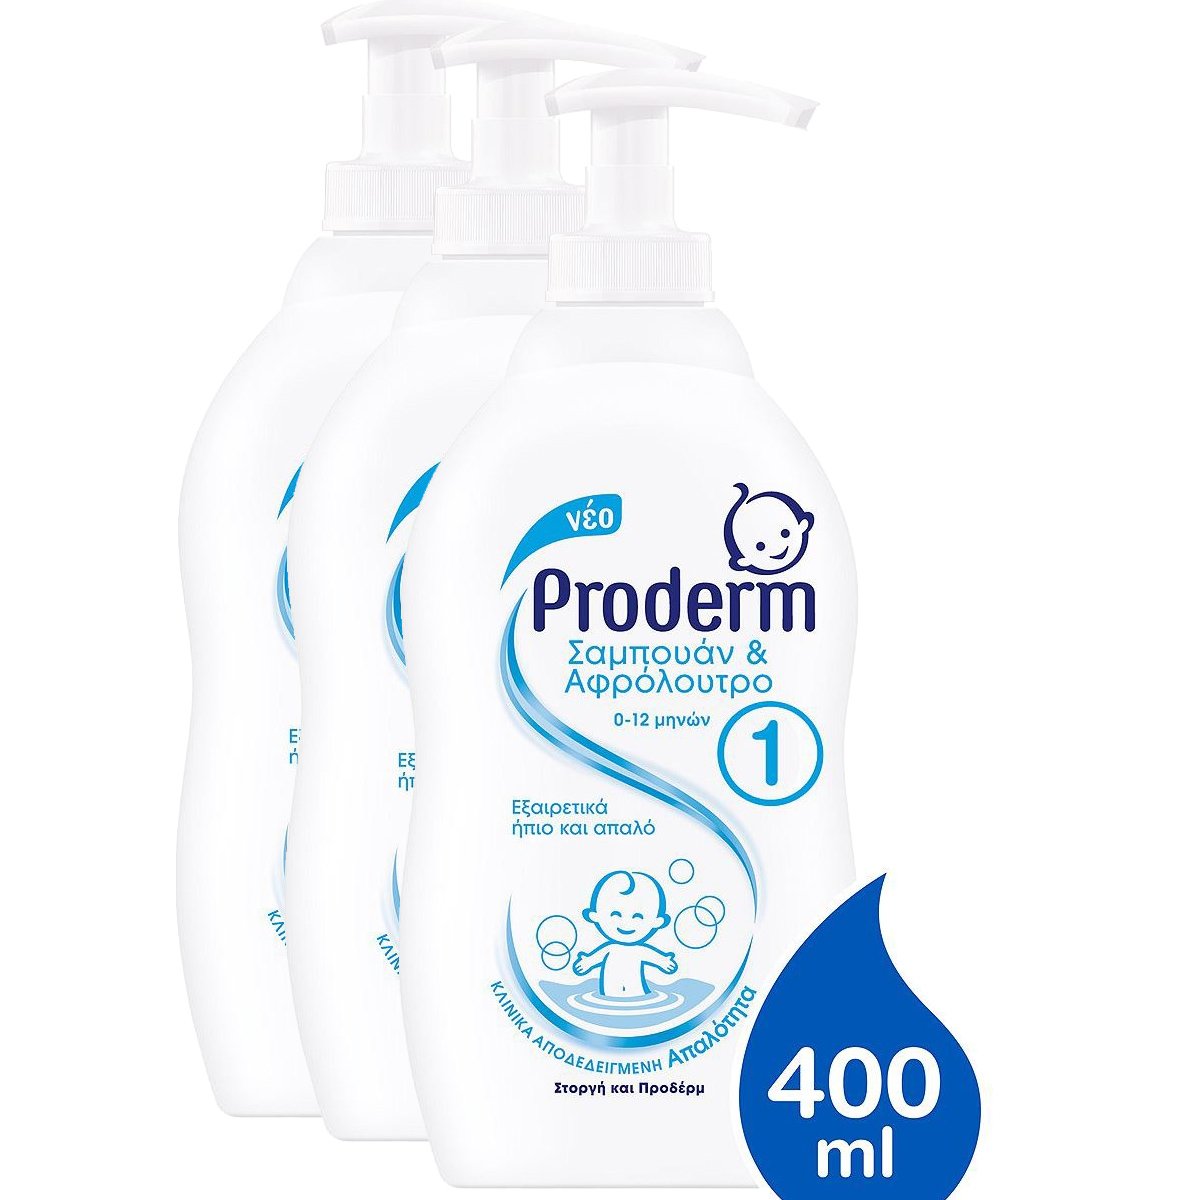 Proderm Proderm Πακέτο Προσφοράς Σαμπουάν & Αφρόλουτρο 0-12 Μηνών 3x400ml